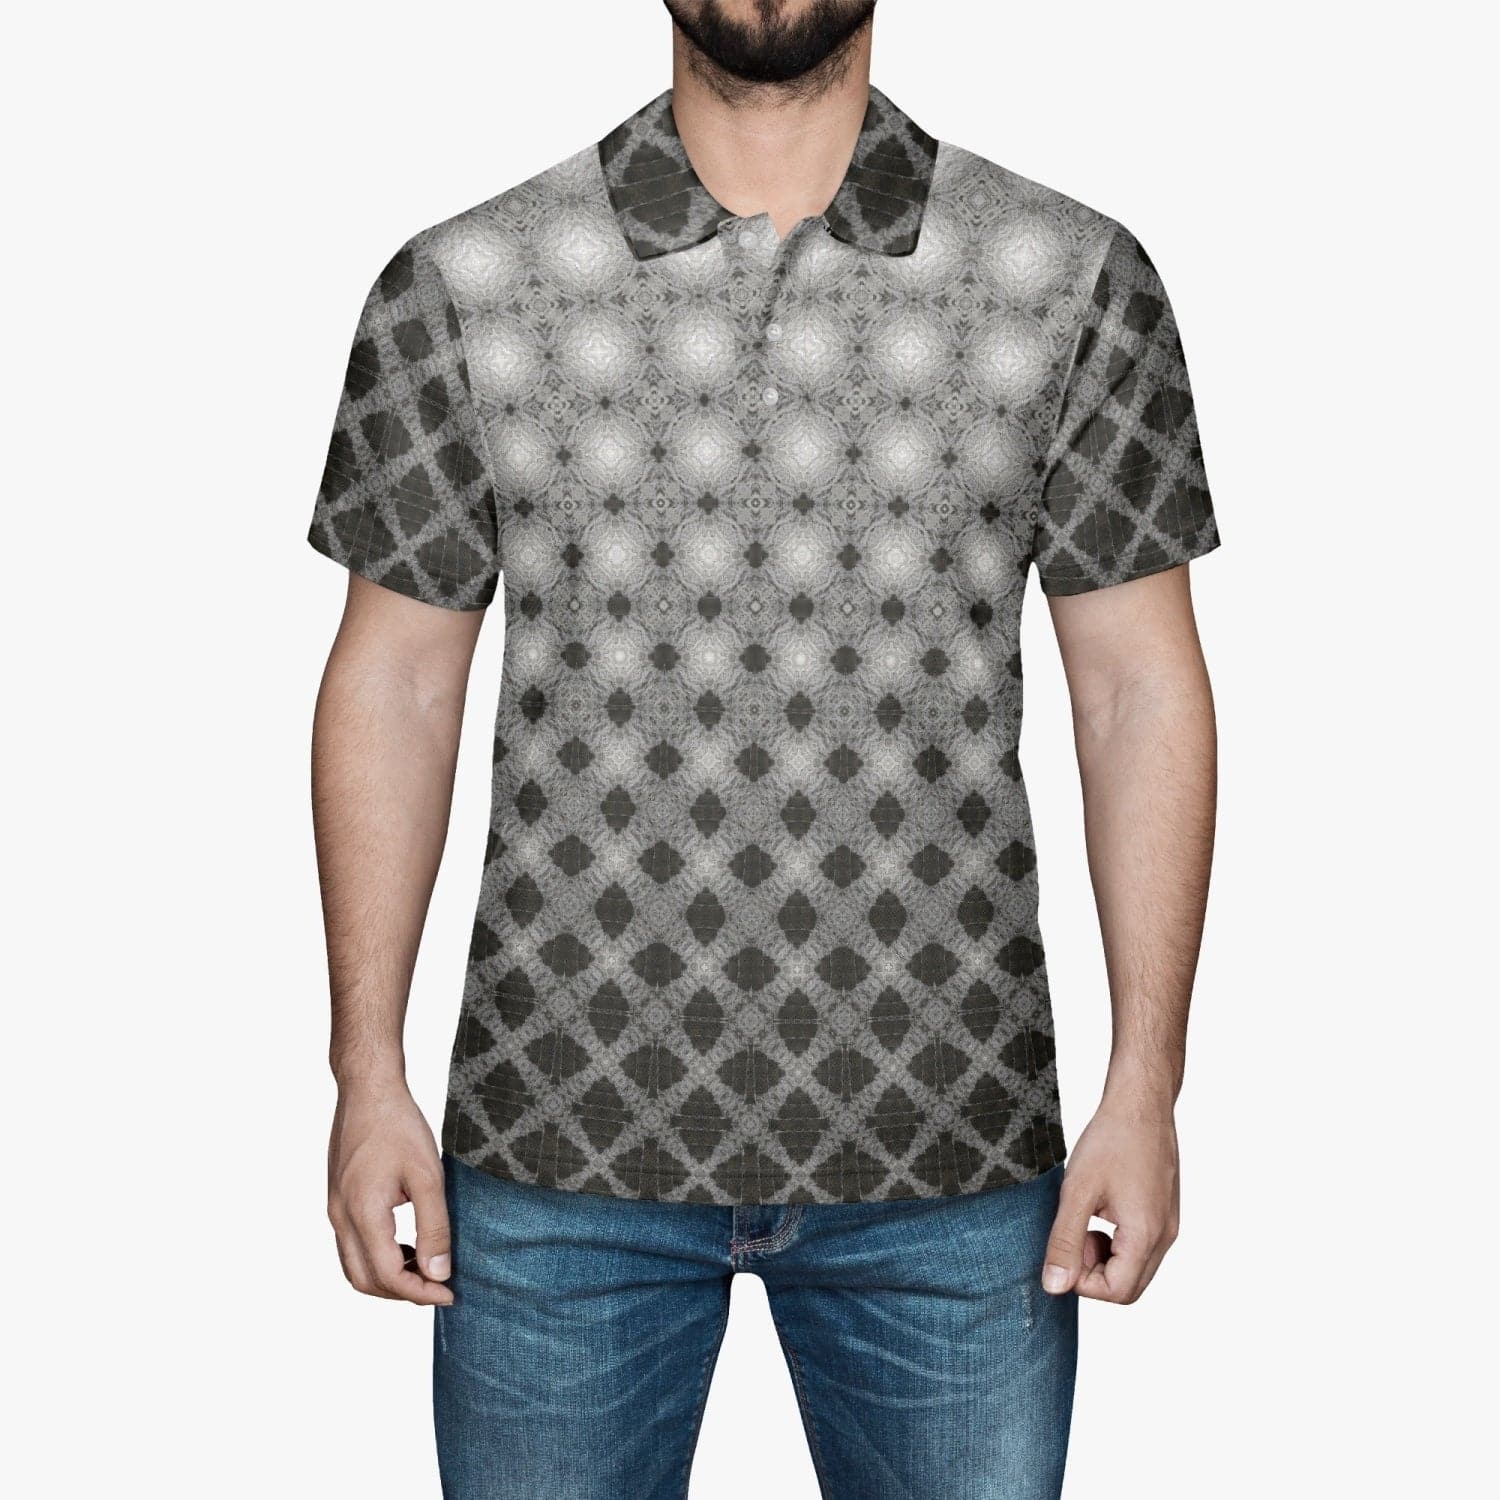 Moon and black night pattern  Handmade  Men Polo Shirt for men, by Sensus Studio Design